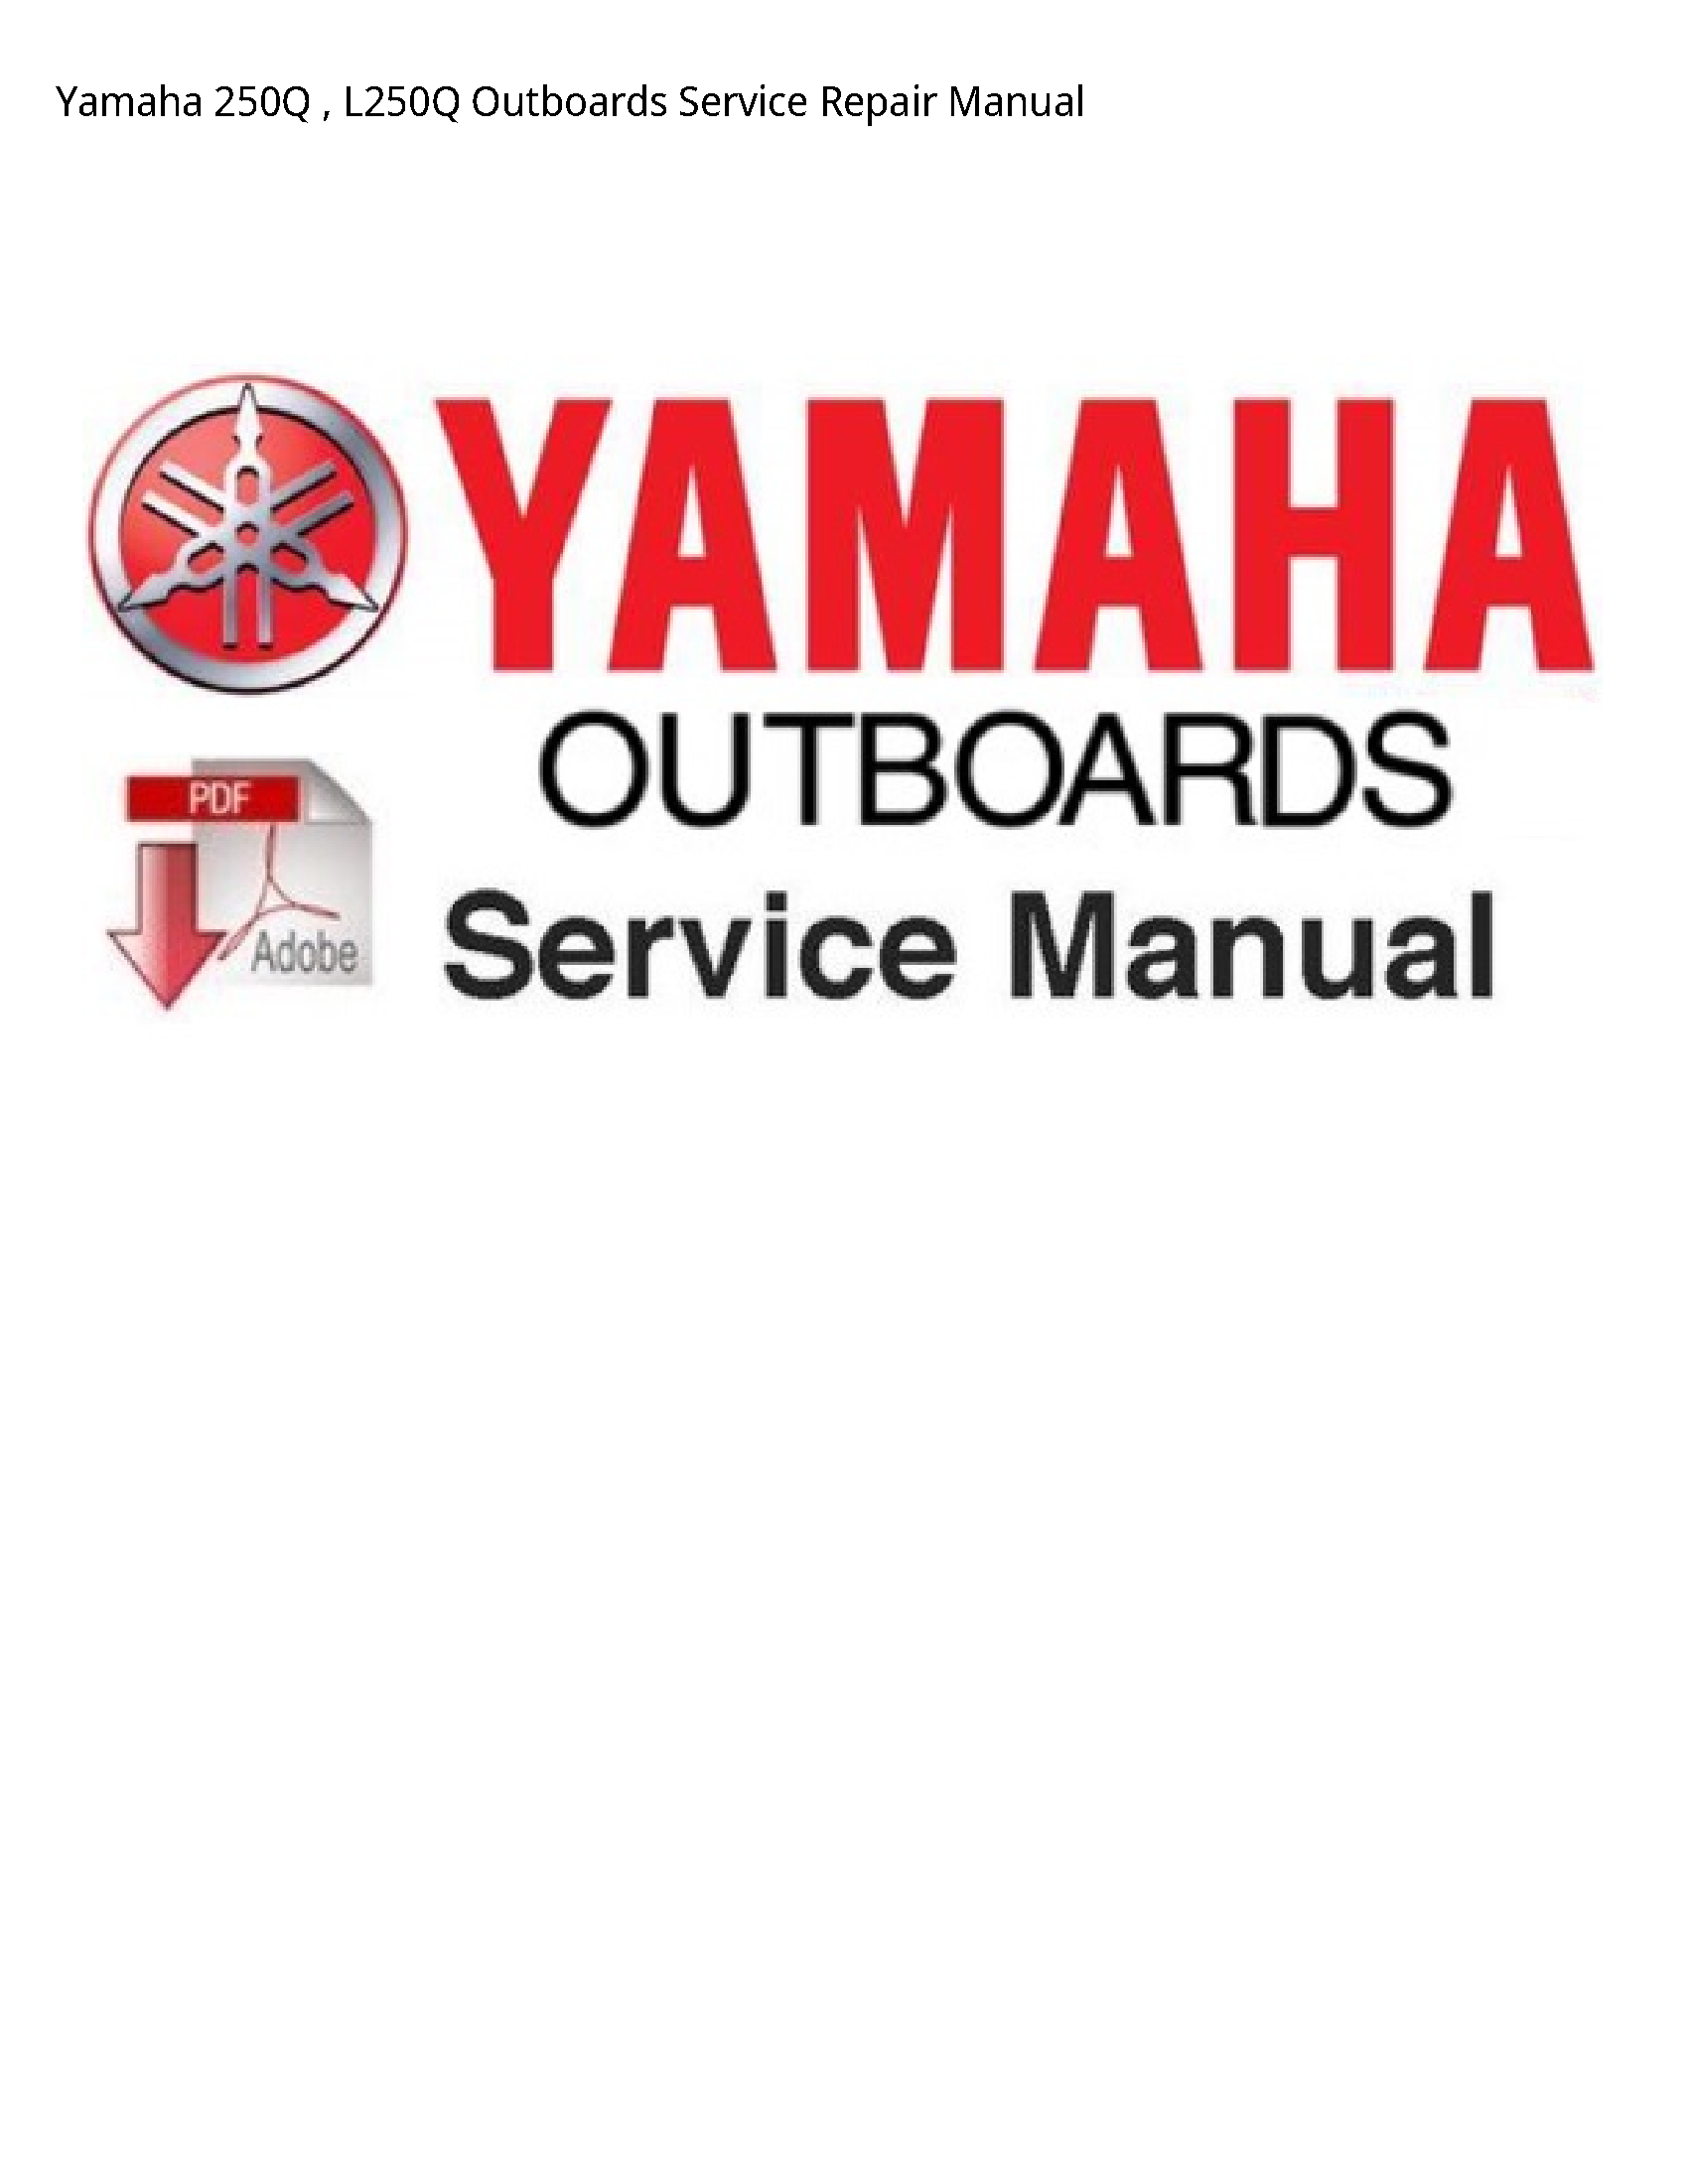 Yamaha 250Q Outboards manual